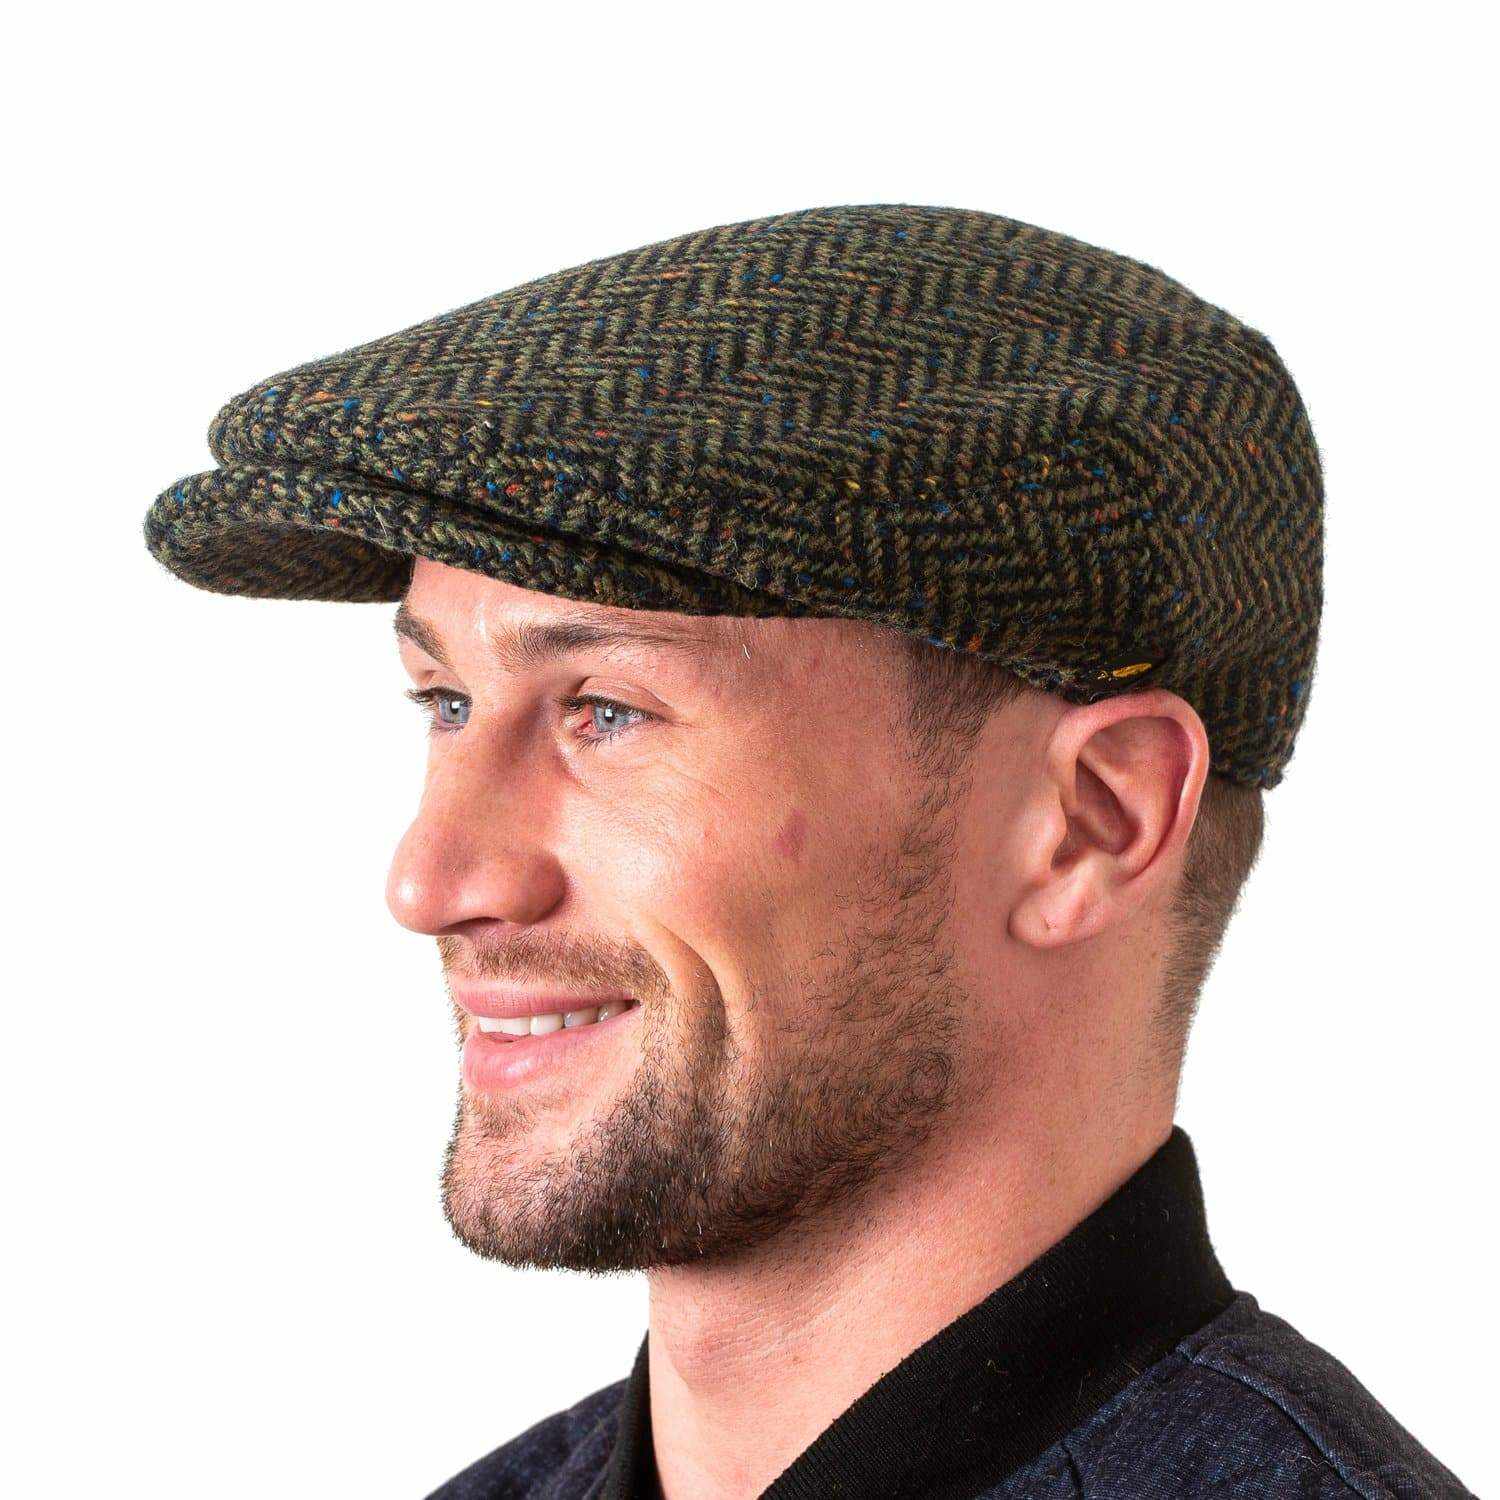 Irish Flat Caps & Tweed Hats - Authentic Irish Hats. Real Irish Caps